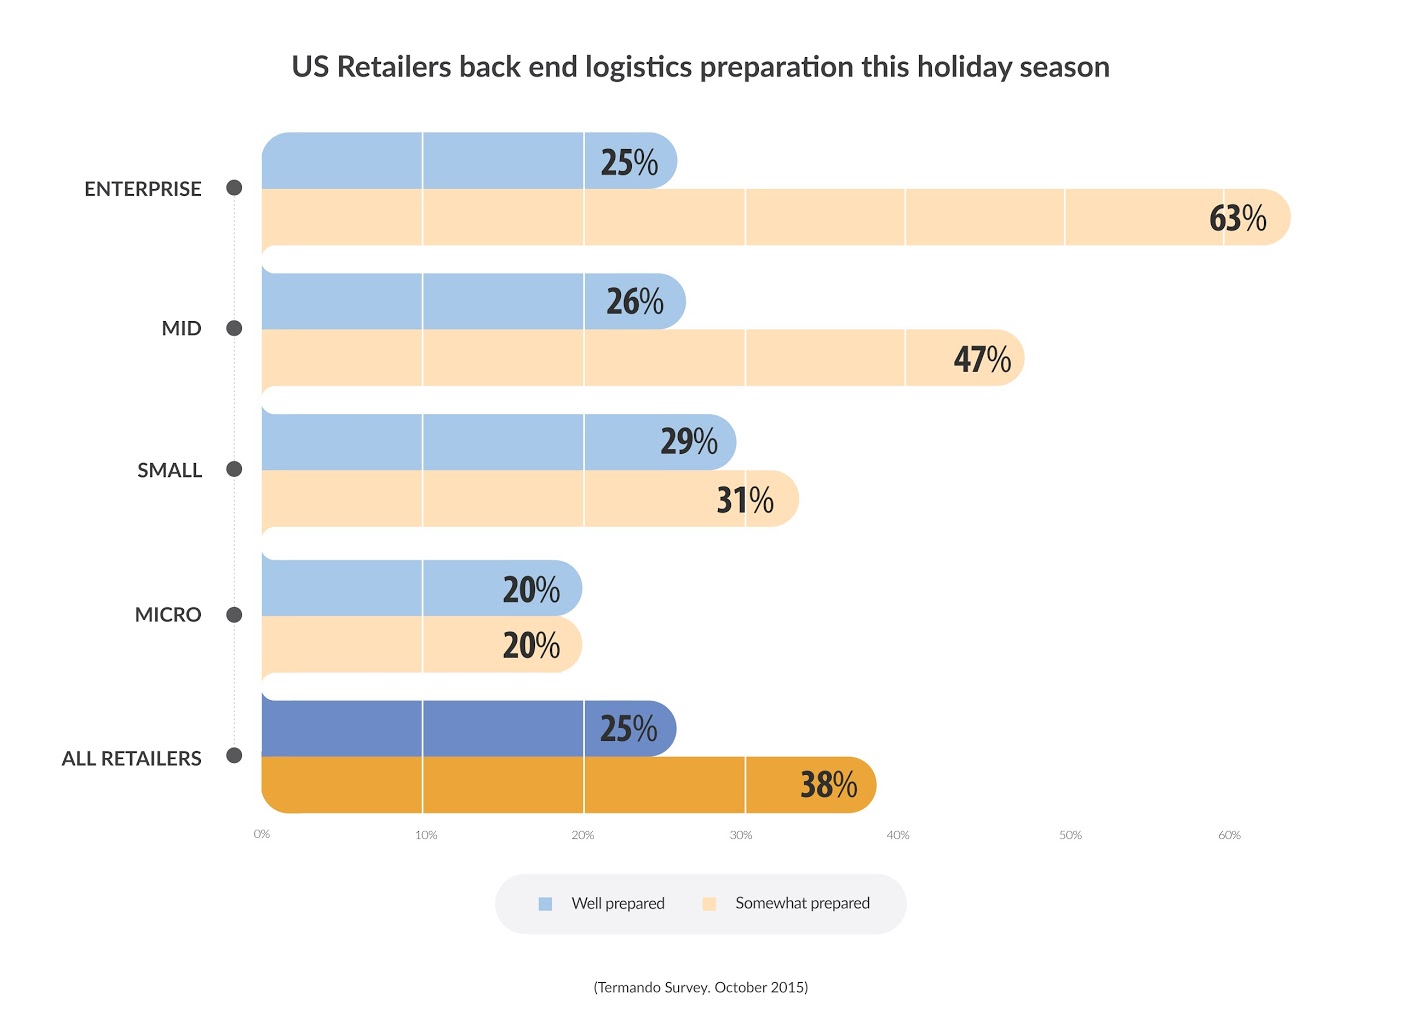 U.S. retailers' preparation for back end logistics